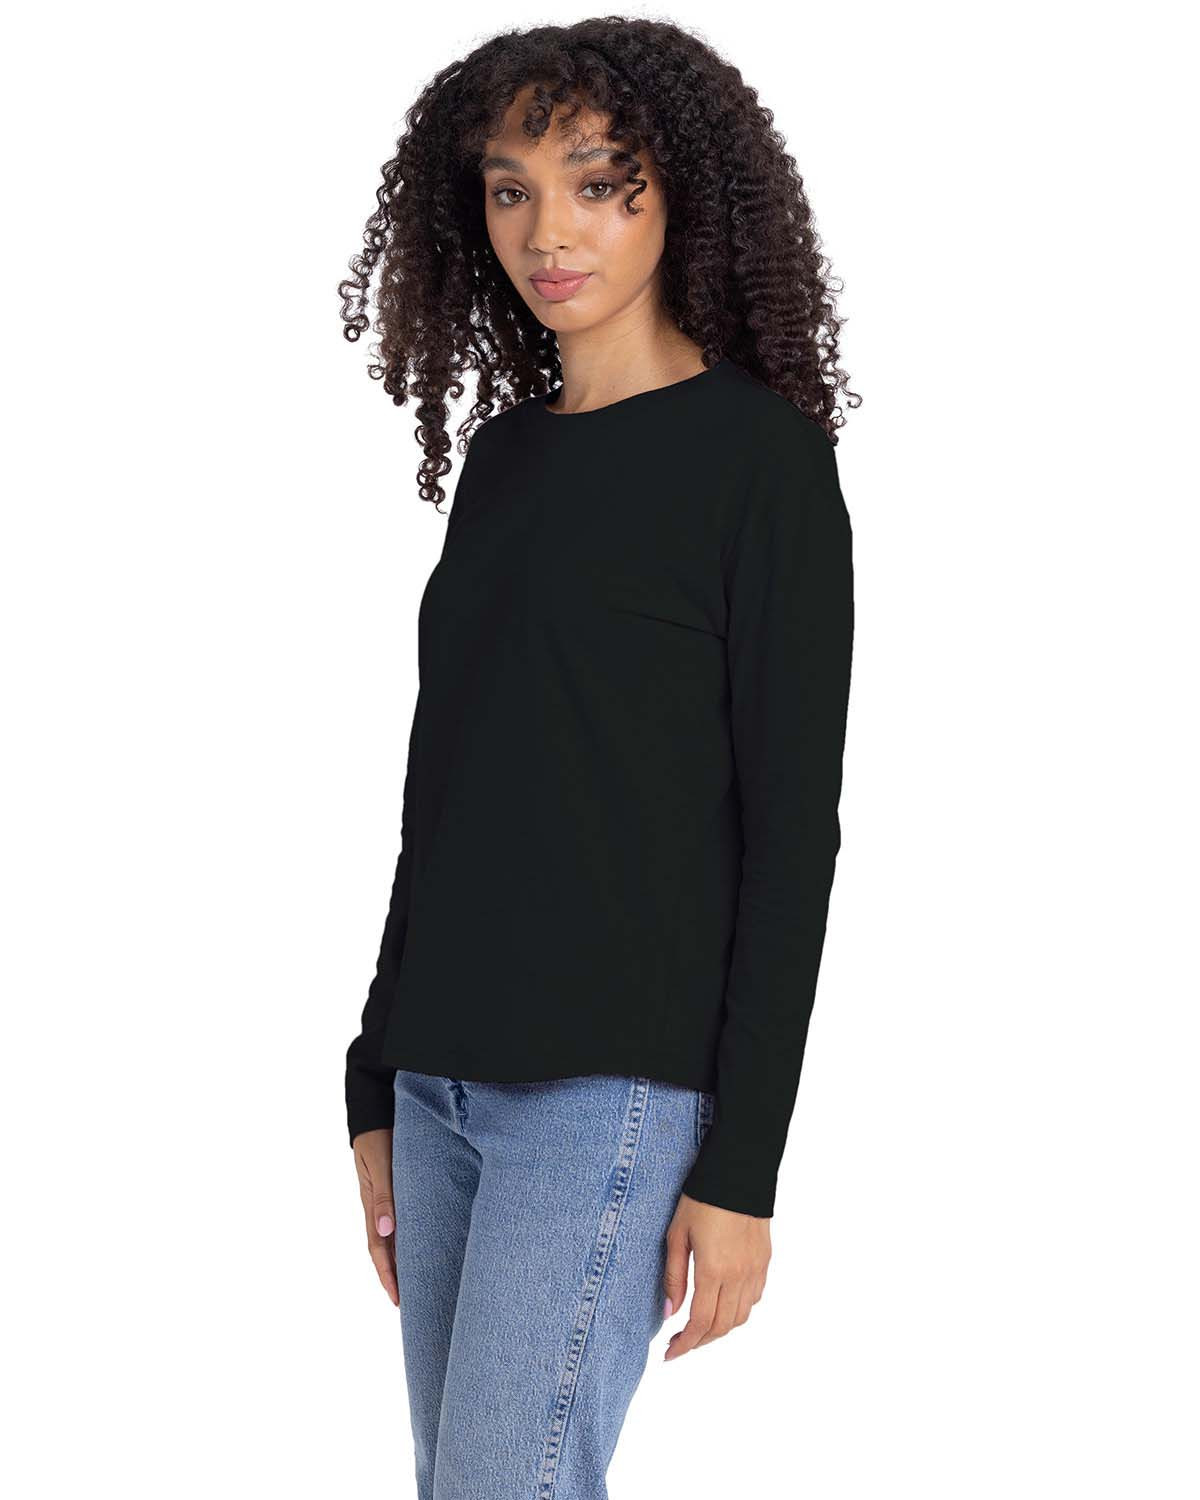 Buy Black Long Shirt For Collage Girls at